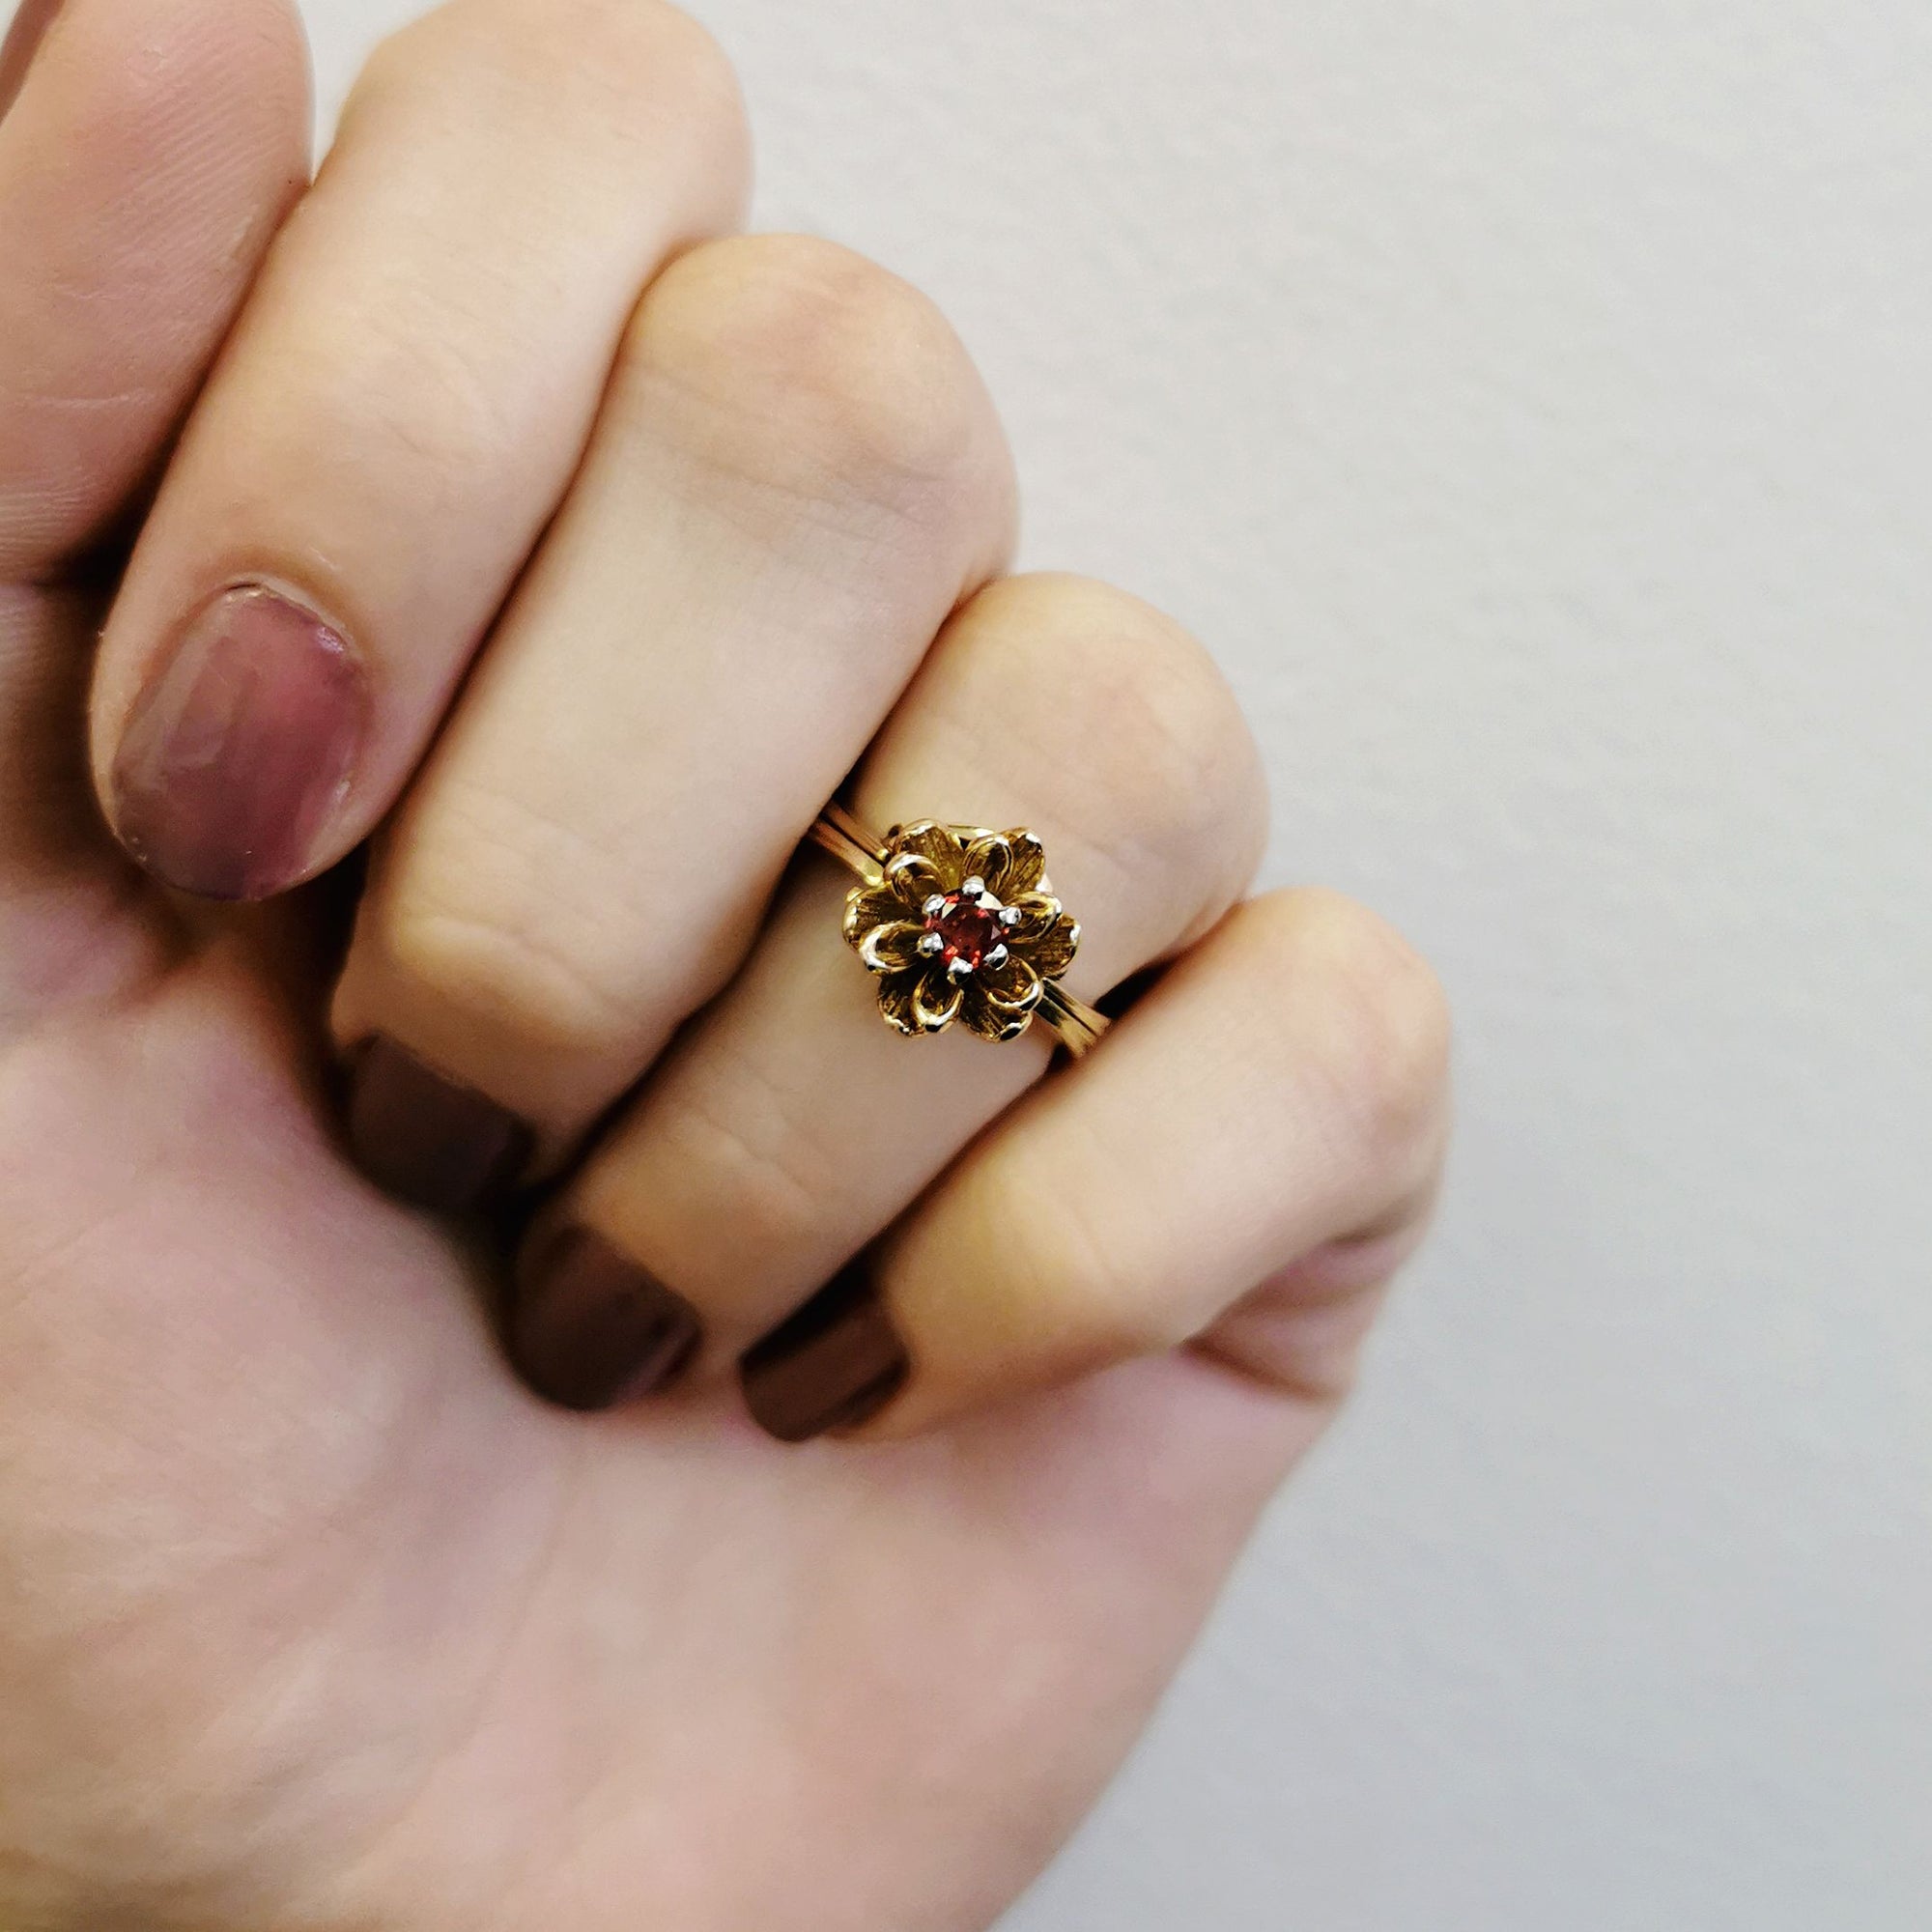 Birks' Floral Garnet Ring Circa 1950s | 0.20ct | SZ 4.75 |